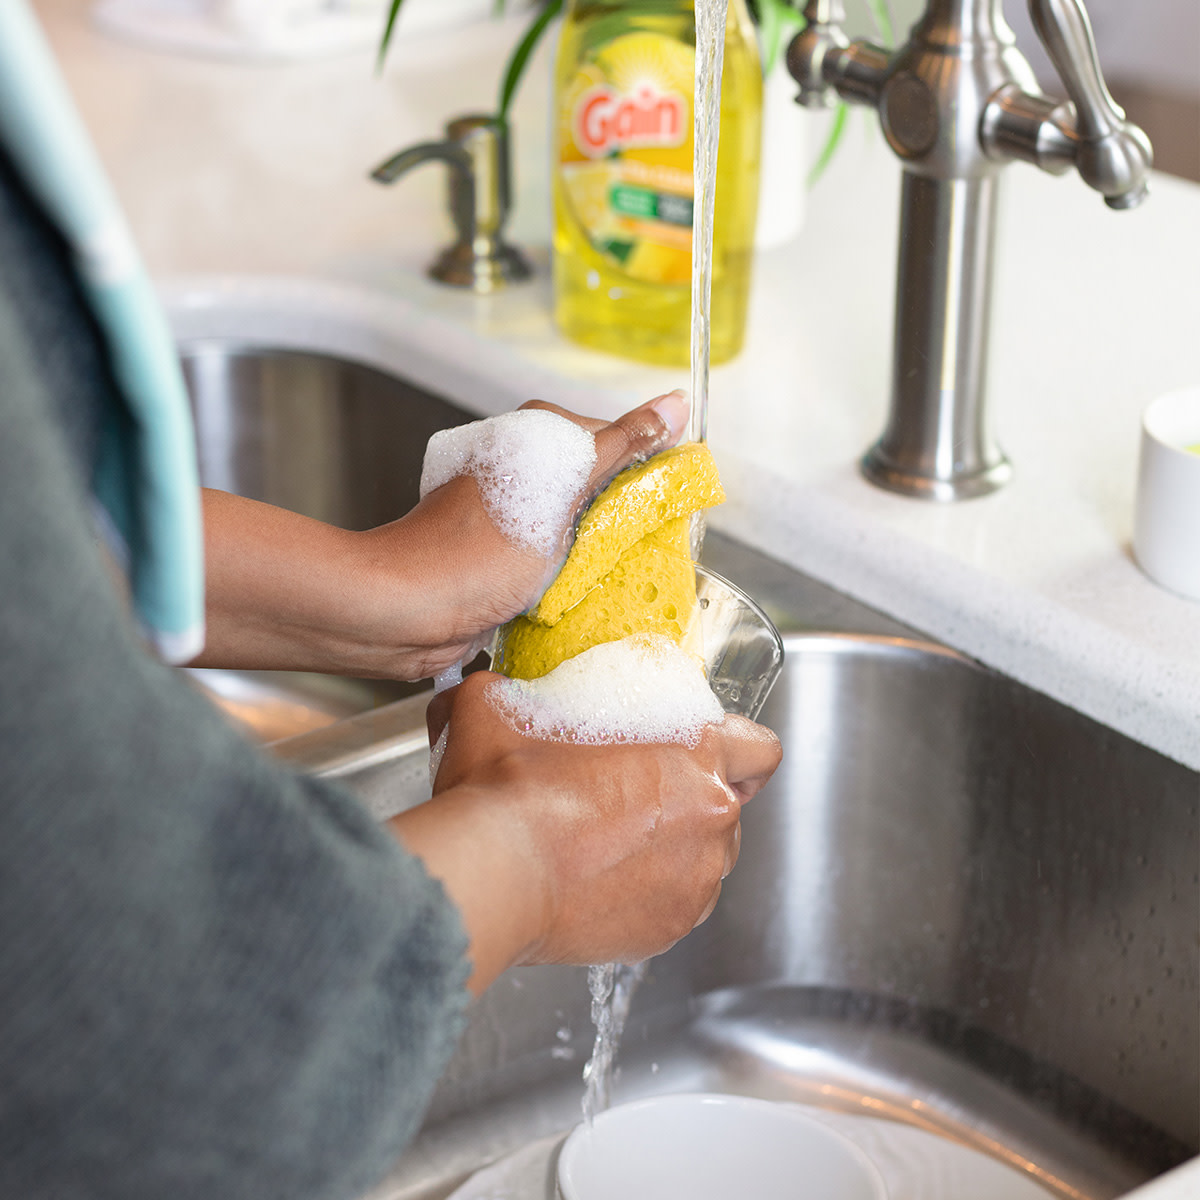 Gain Ultra Dishwashing Liquid Dish Soap Lemon Zest in Kitchen